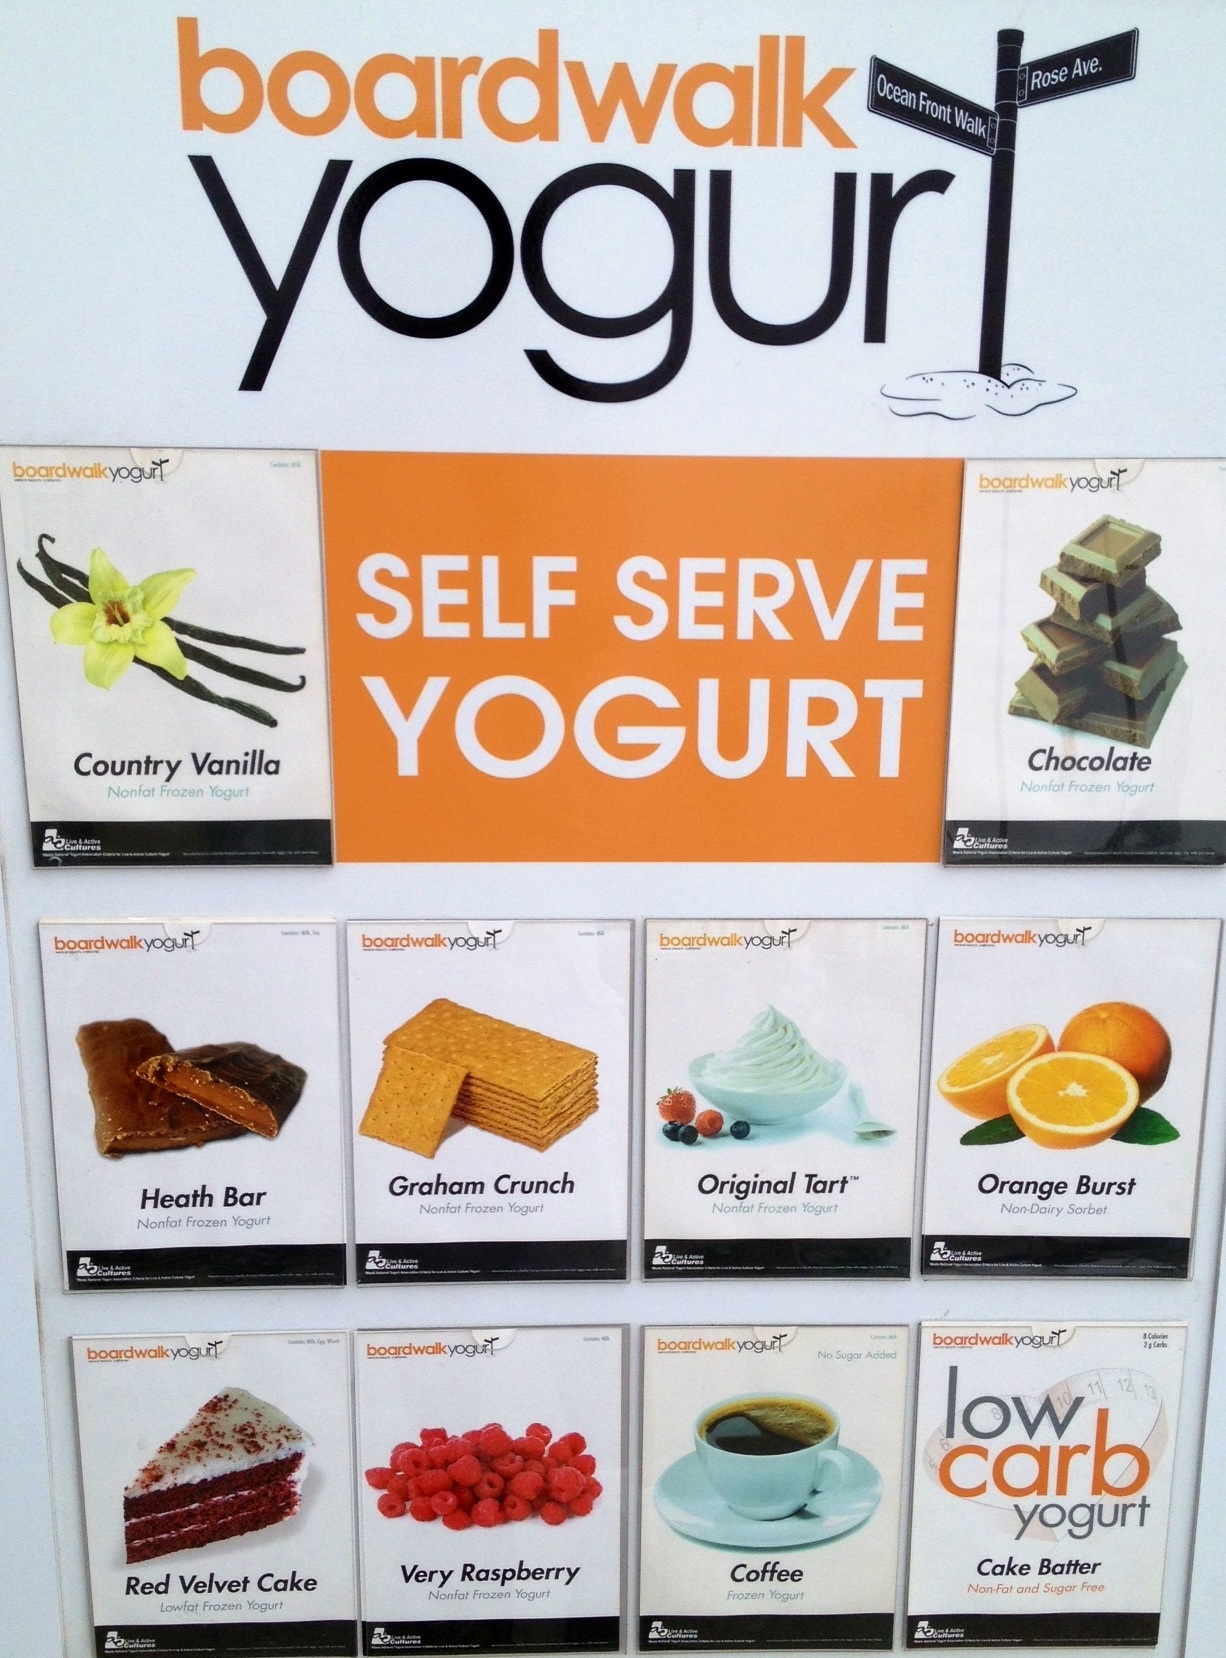 Boardwalk Yogurt